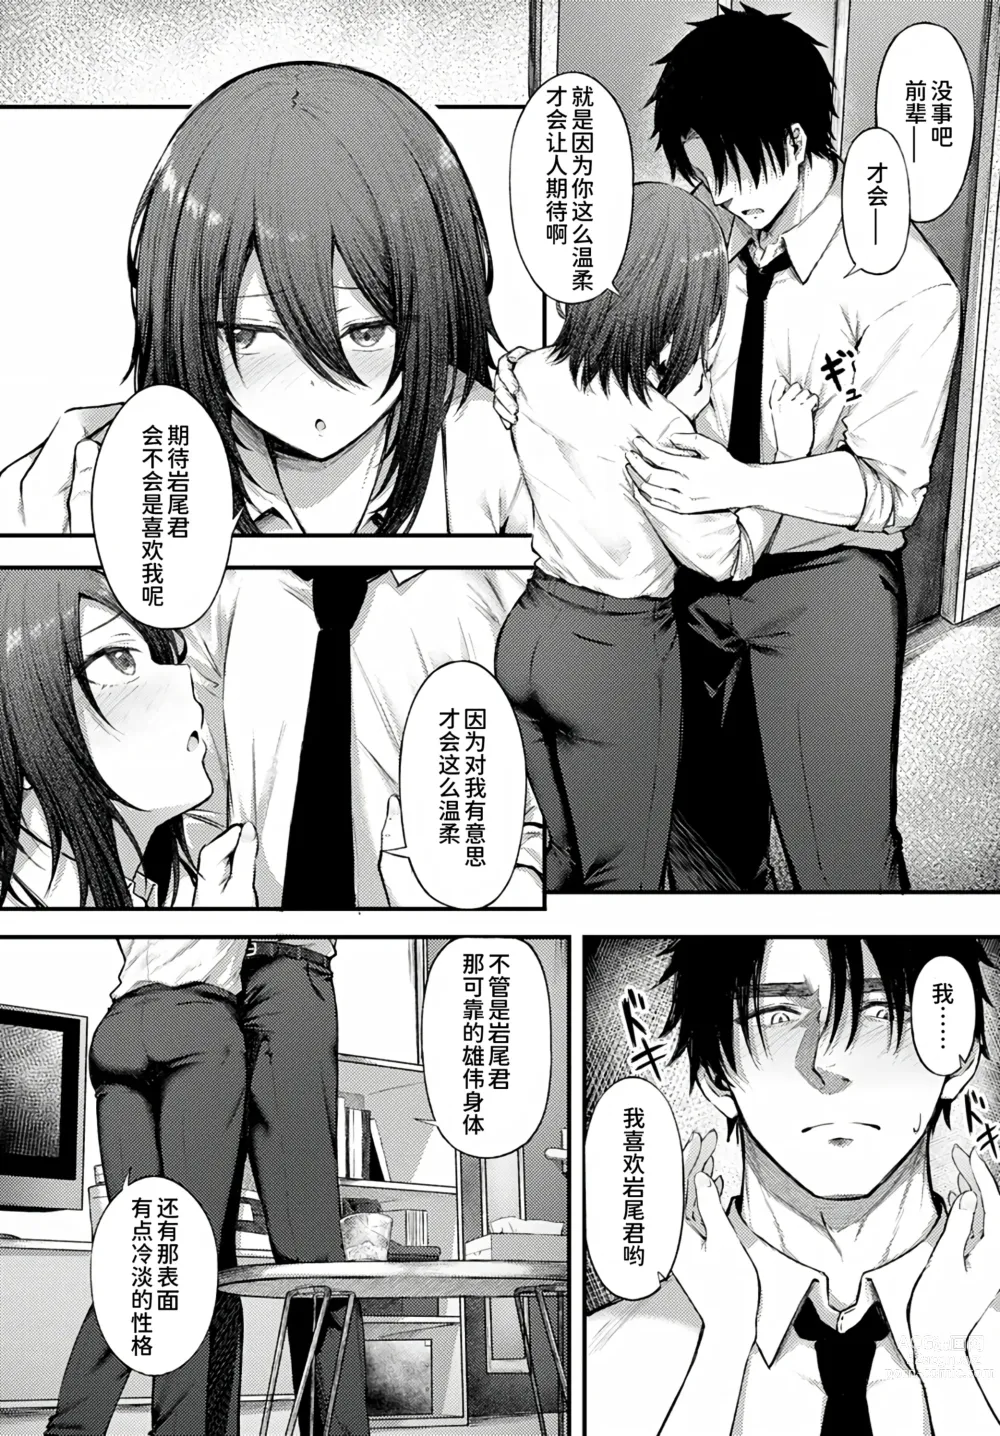 Page 7 of manga Make Love